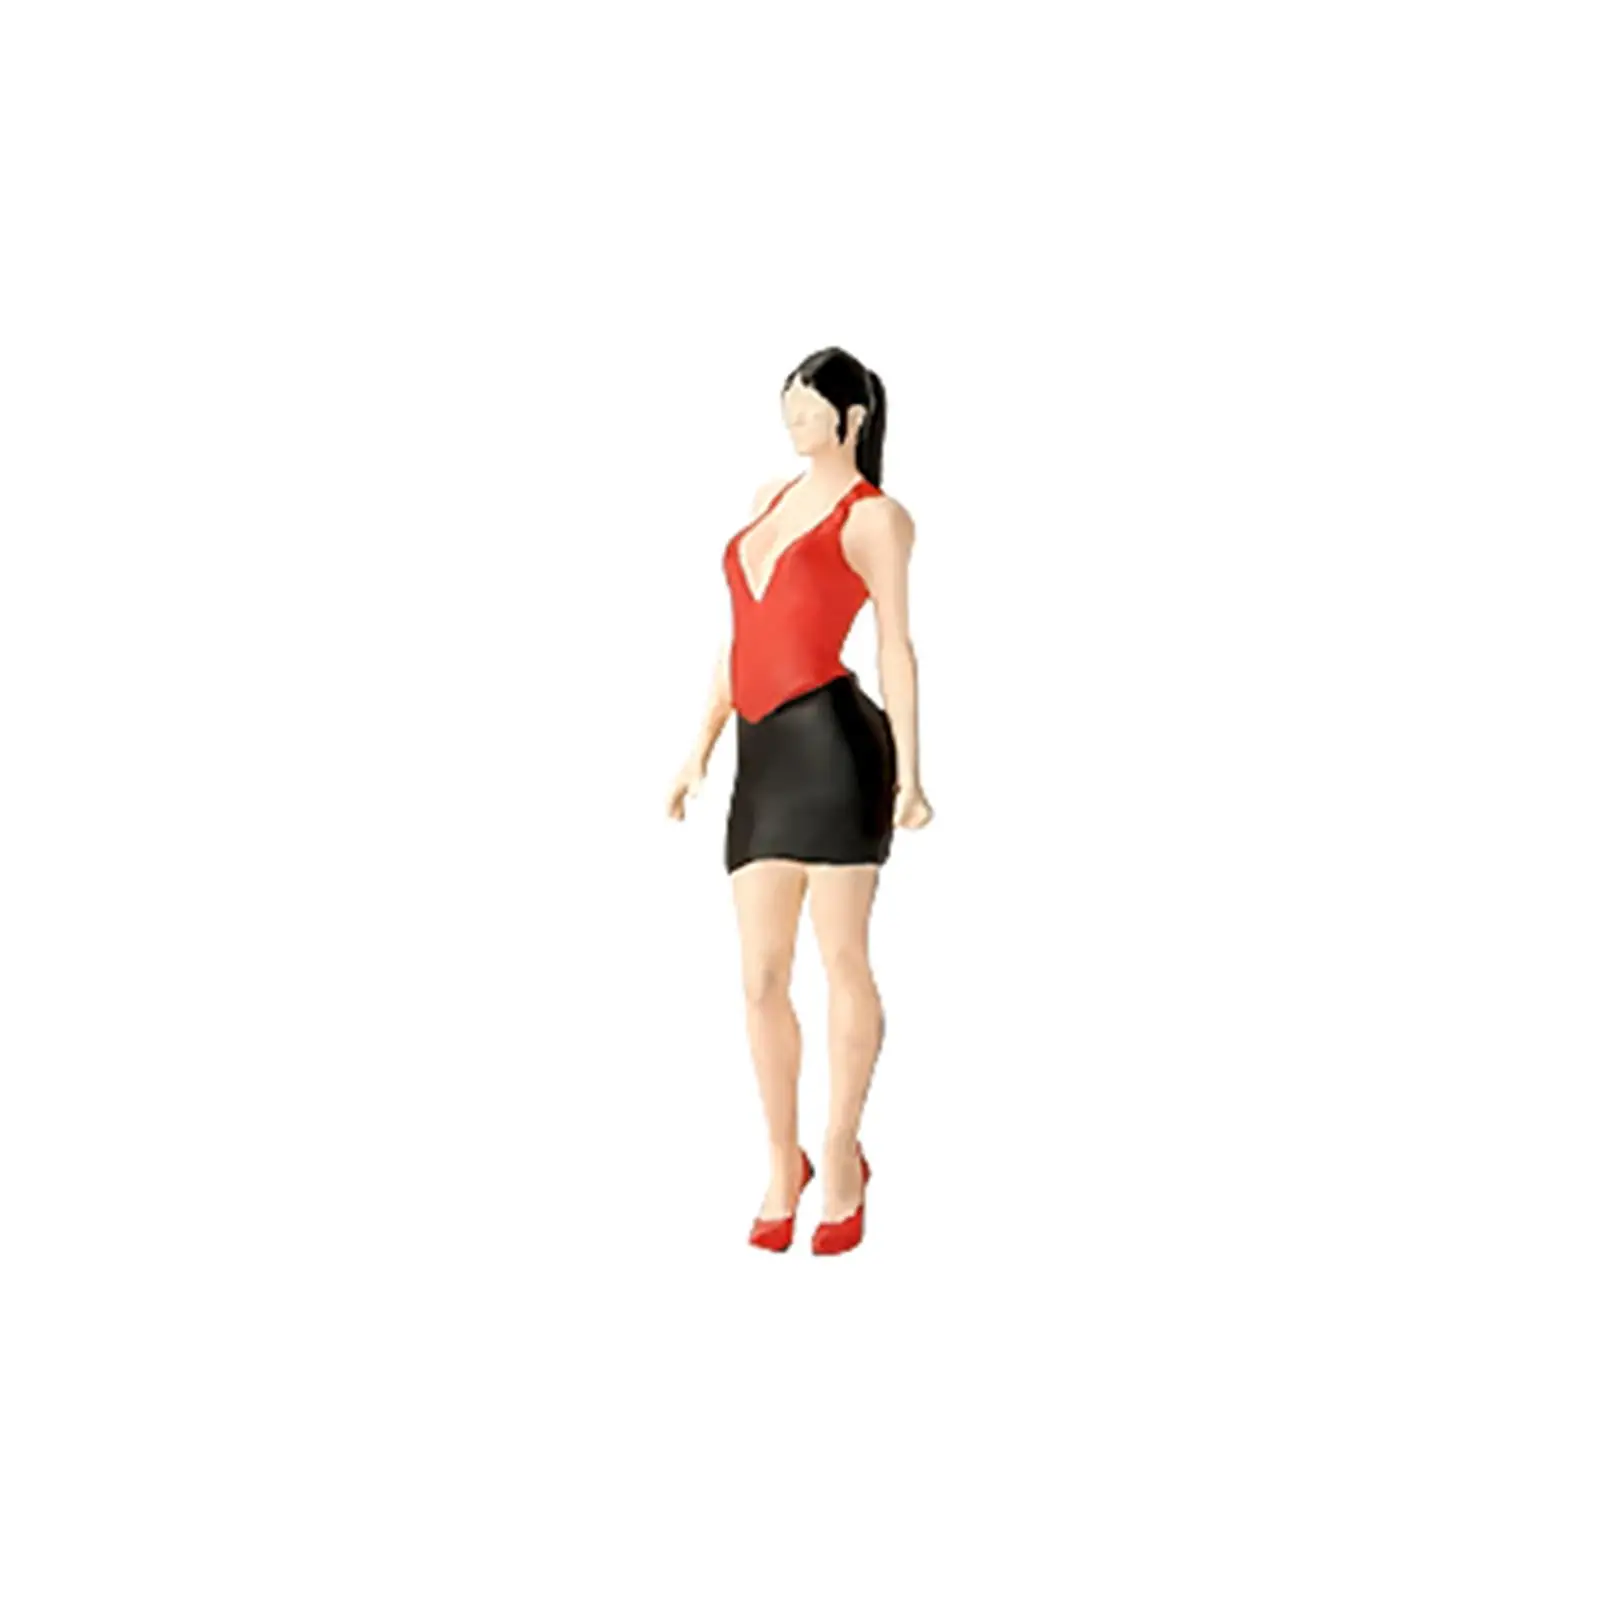 1/64 People Figures Miniature Resin Desk Decoration 3D Printed Tiny People Model Realistic /64 Scale Model People Figures